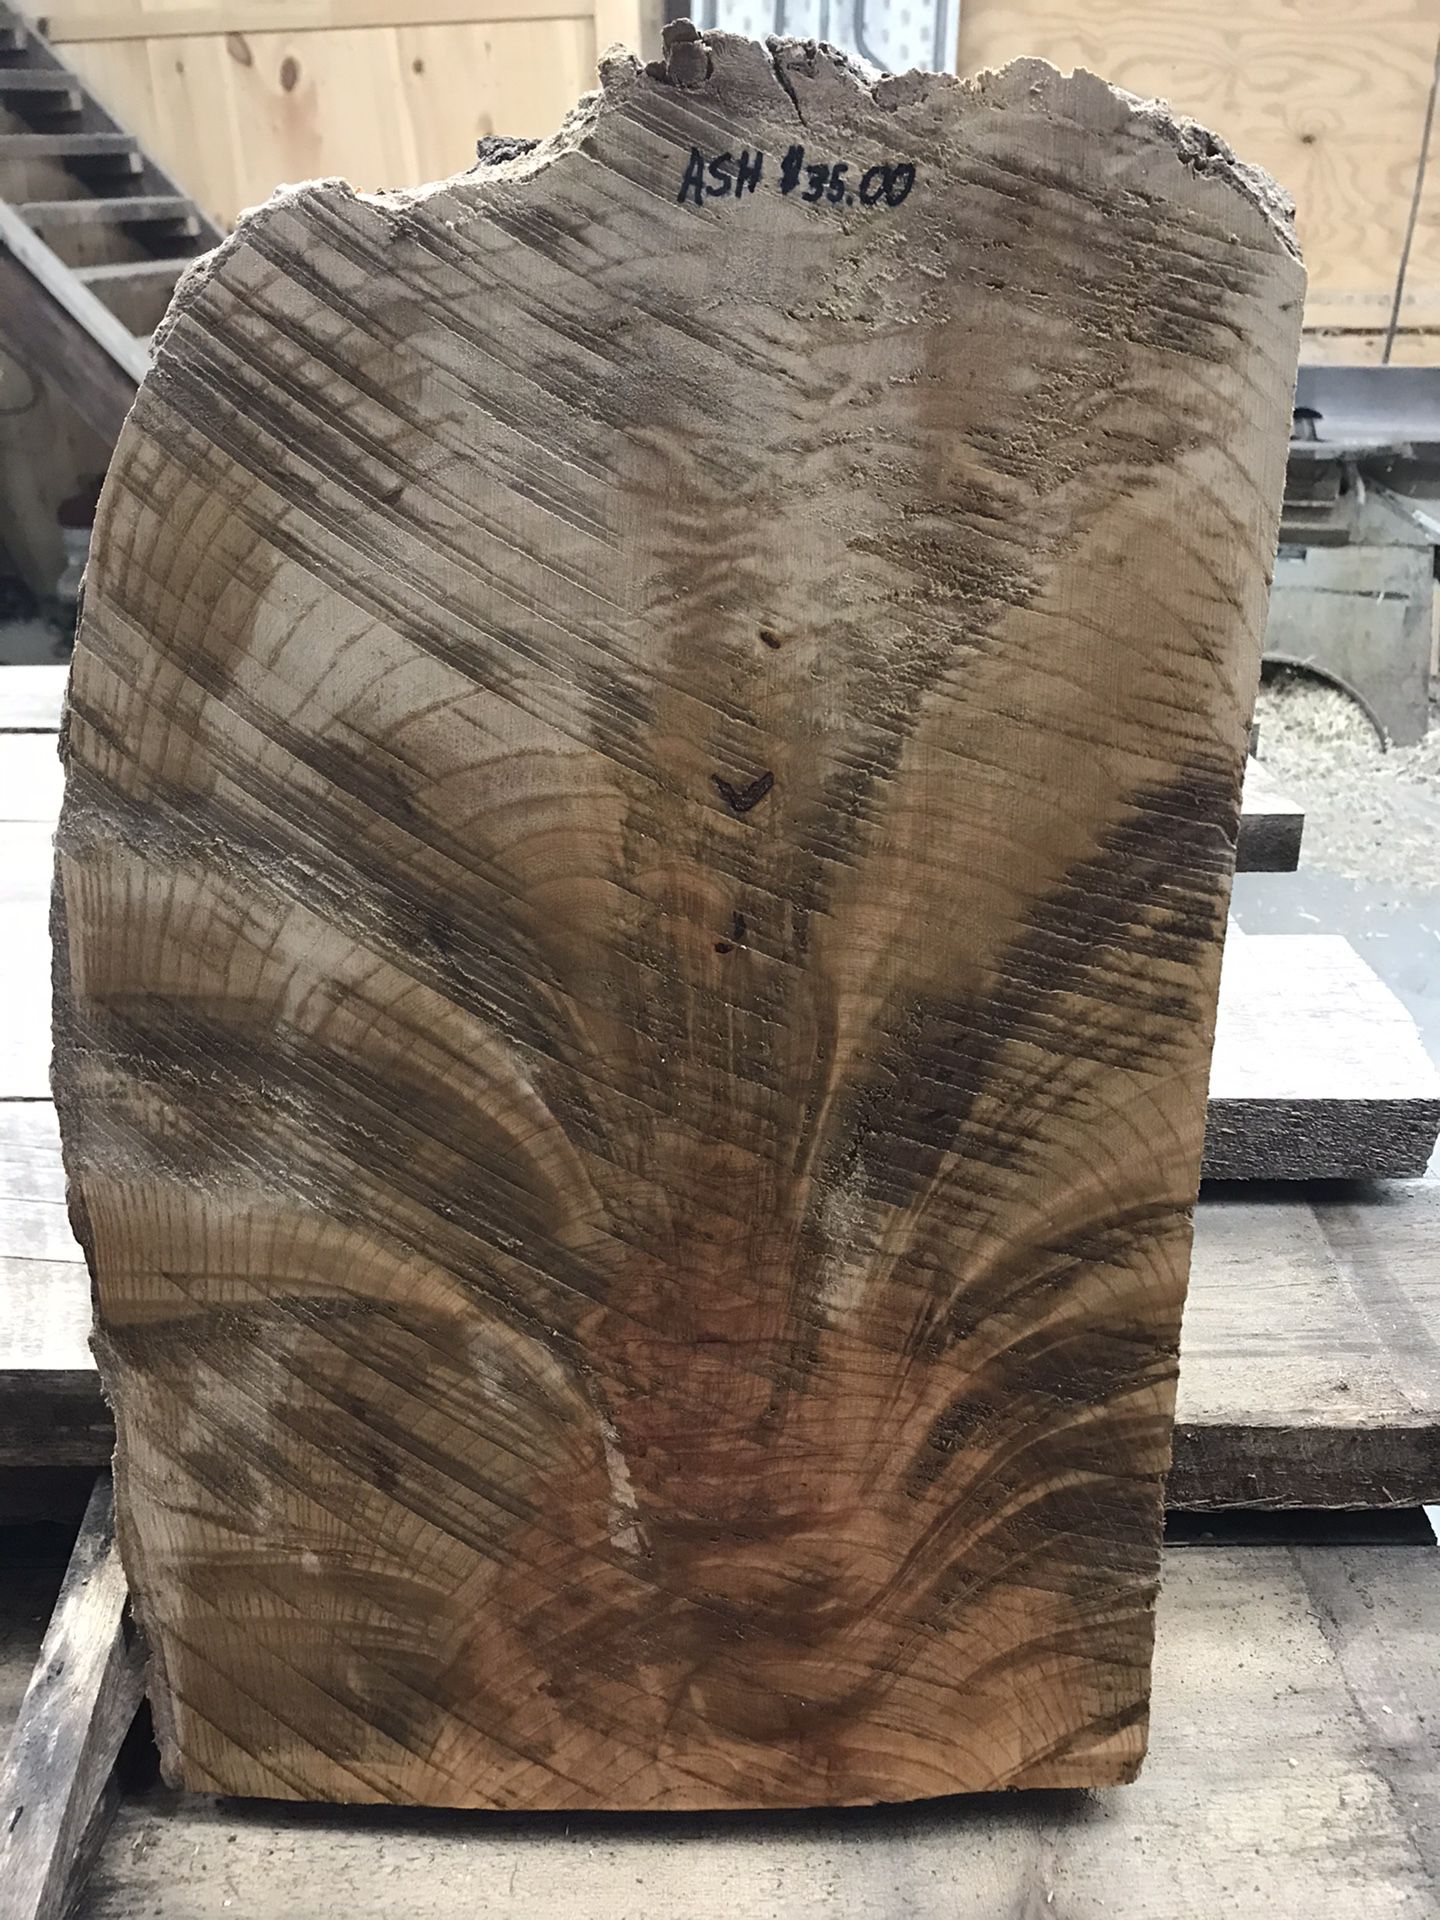 Highly figured ash lumber